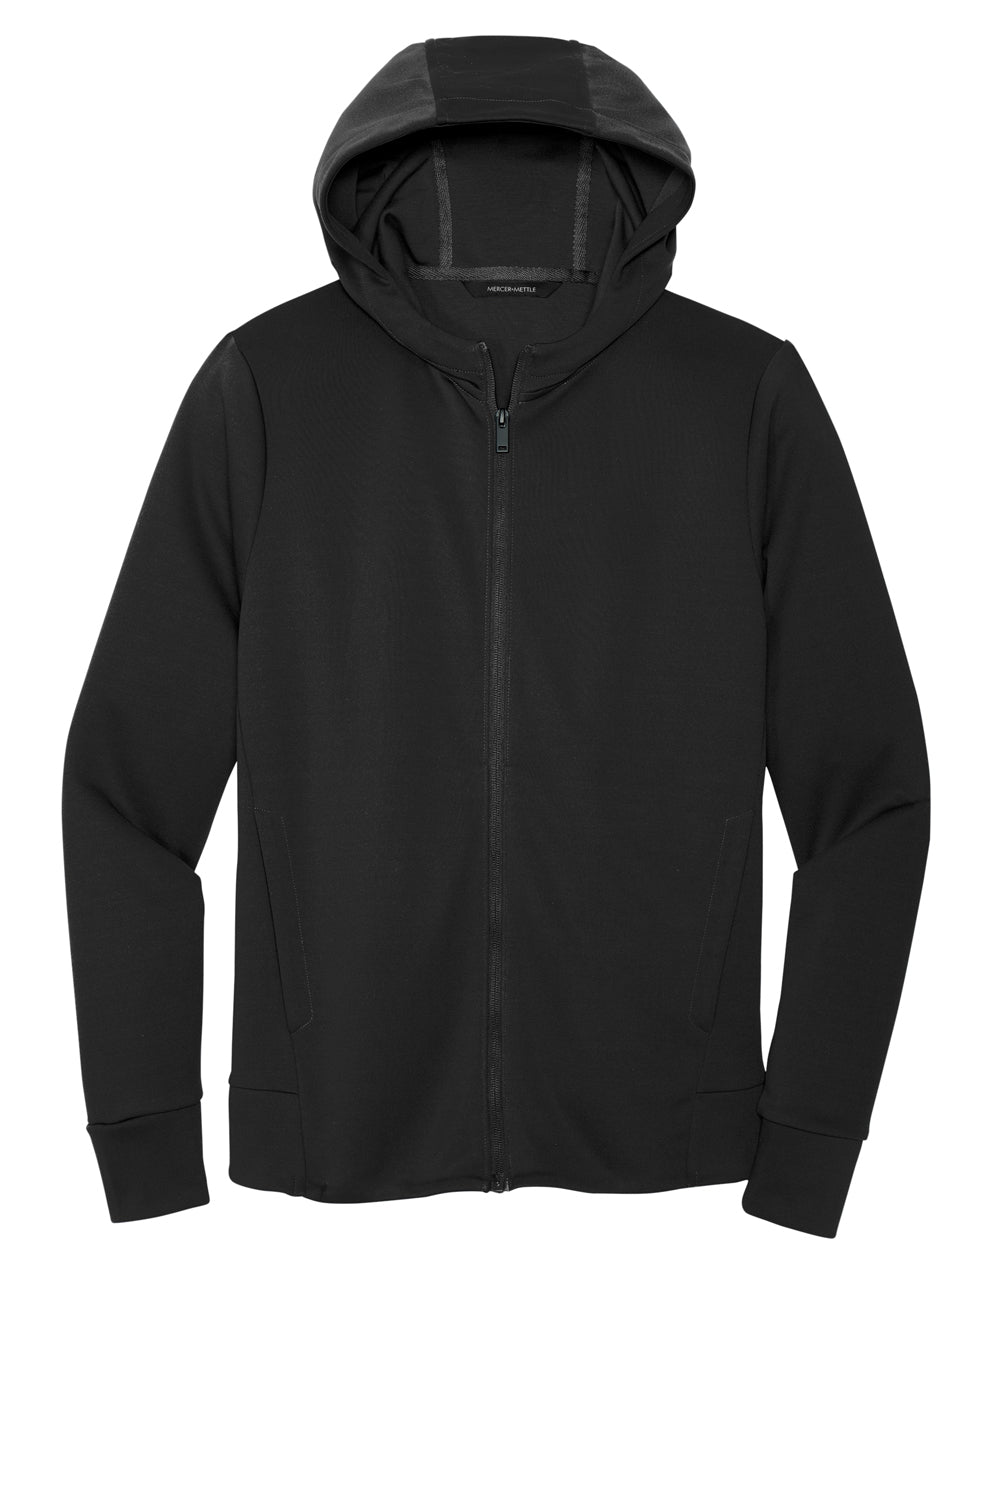 Mercer+Mettle MM3002 Double Knit Full Zip Hooded Sweatshirt Hoodie Deep Black Flat Front